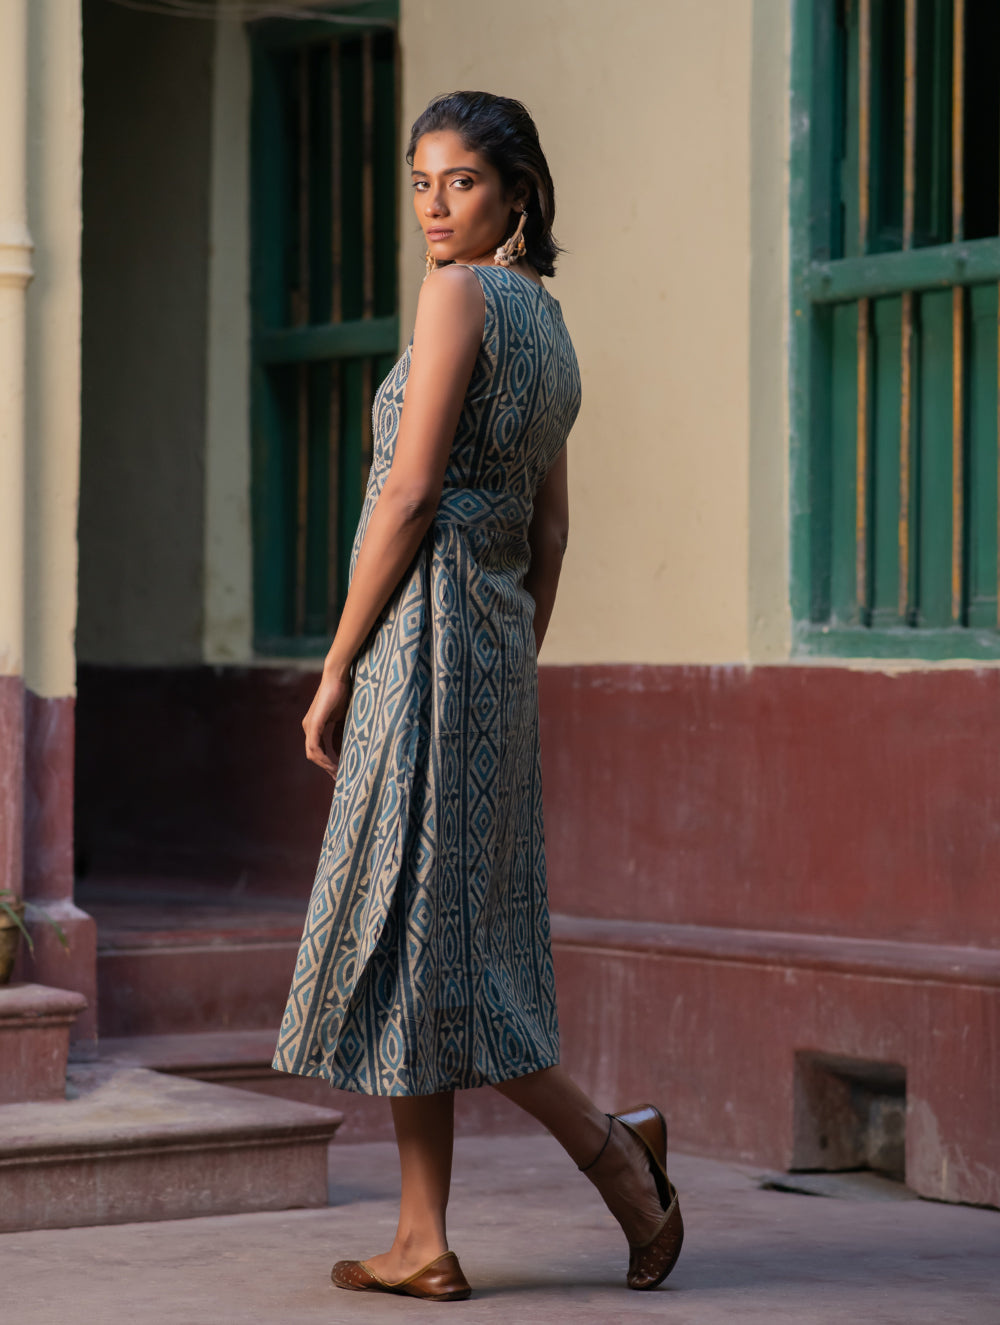 Load image into Gallery viewer, Ajrakh Handblock Printed Summer Dress 